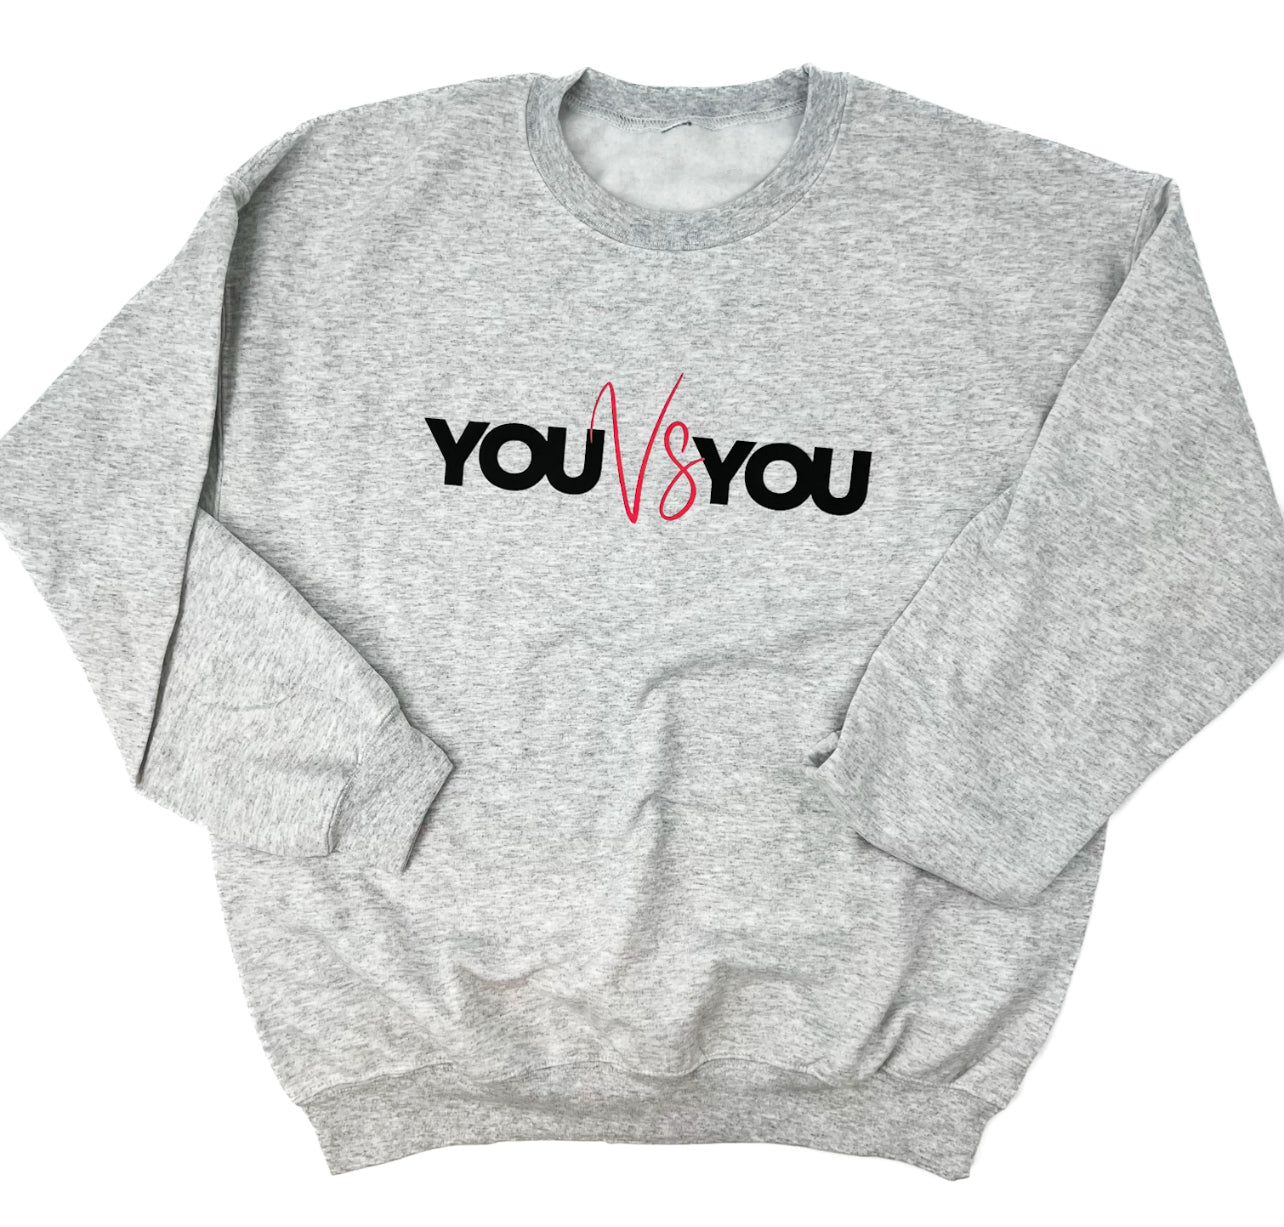 You Vs You Sweatshirts & Tees - GrowToVate